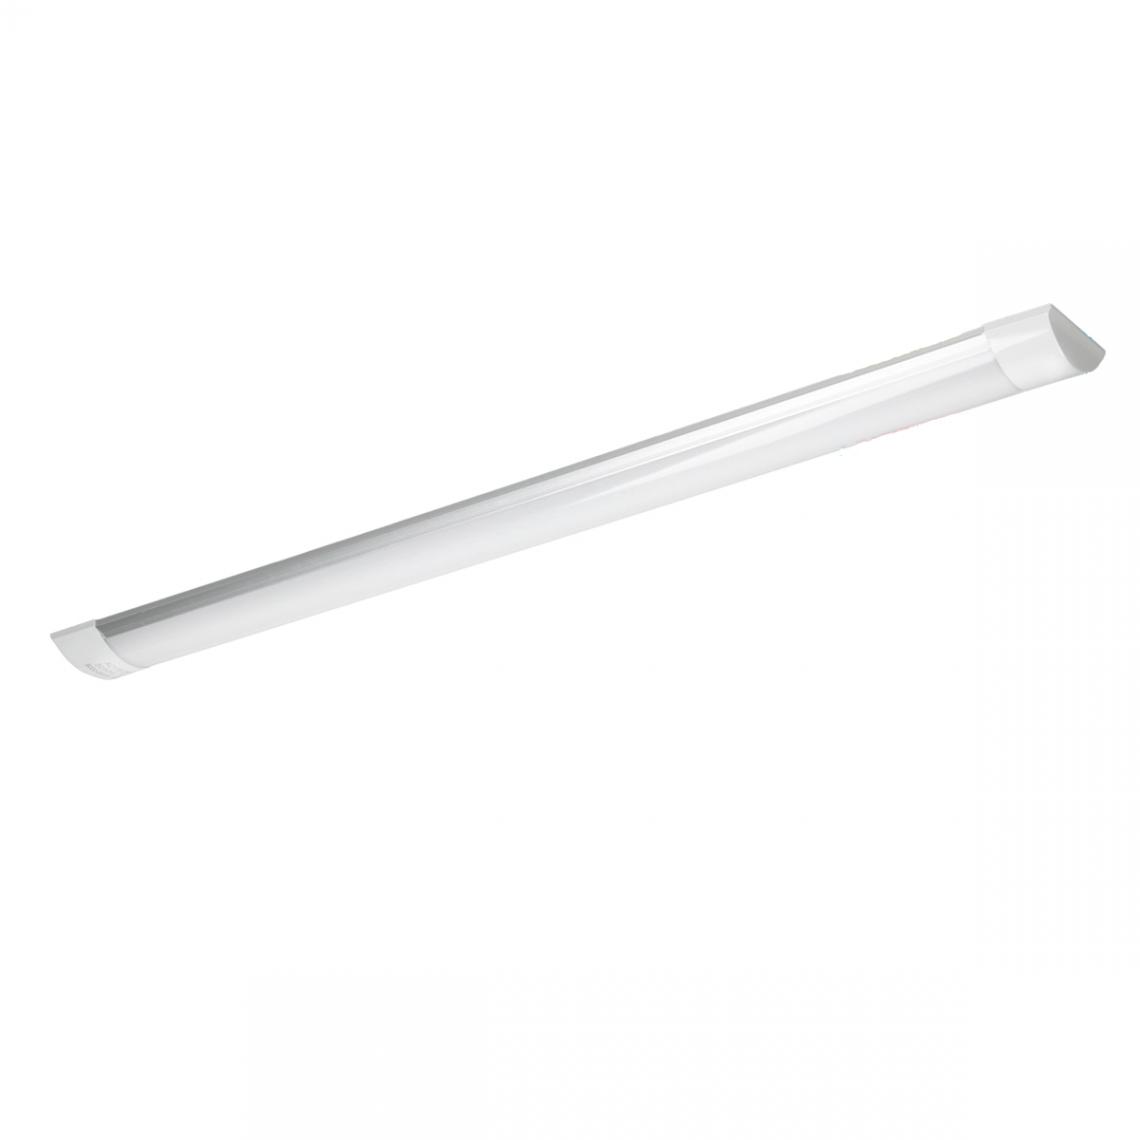 Ecd Germany - Set 6x LED batten tube 28W 90cm blanc froid surface luminaire slim barre plafond - Tubes et néons